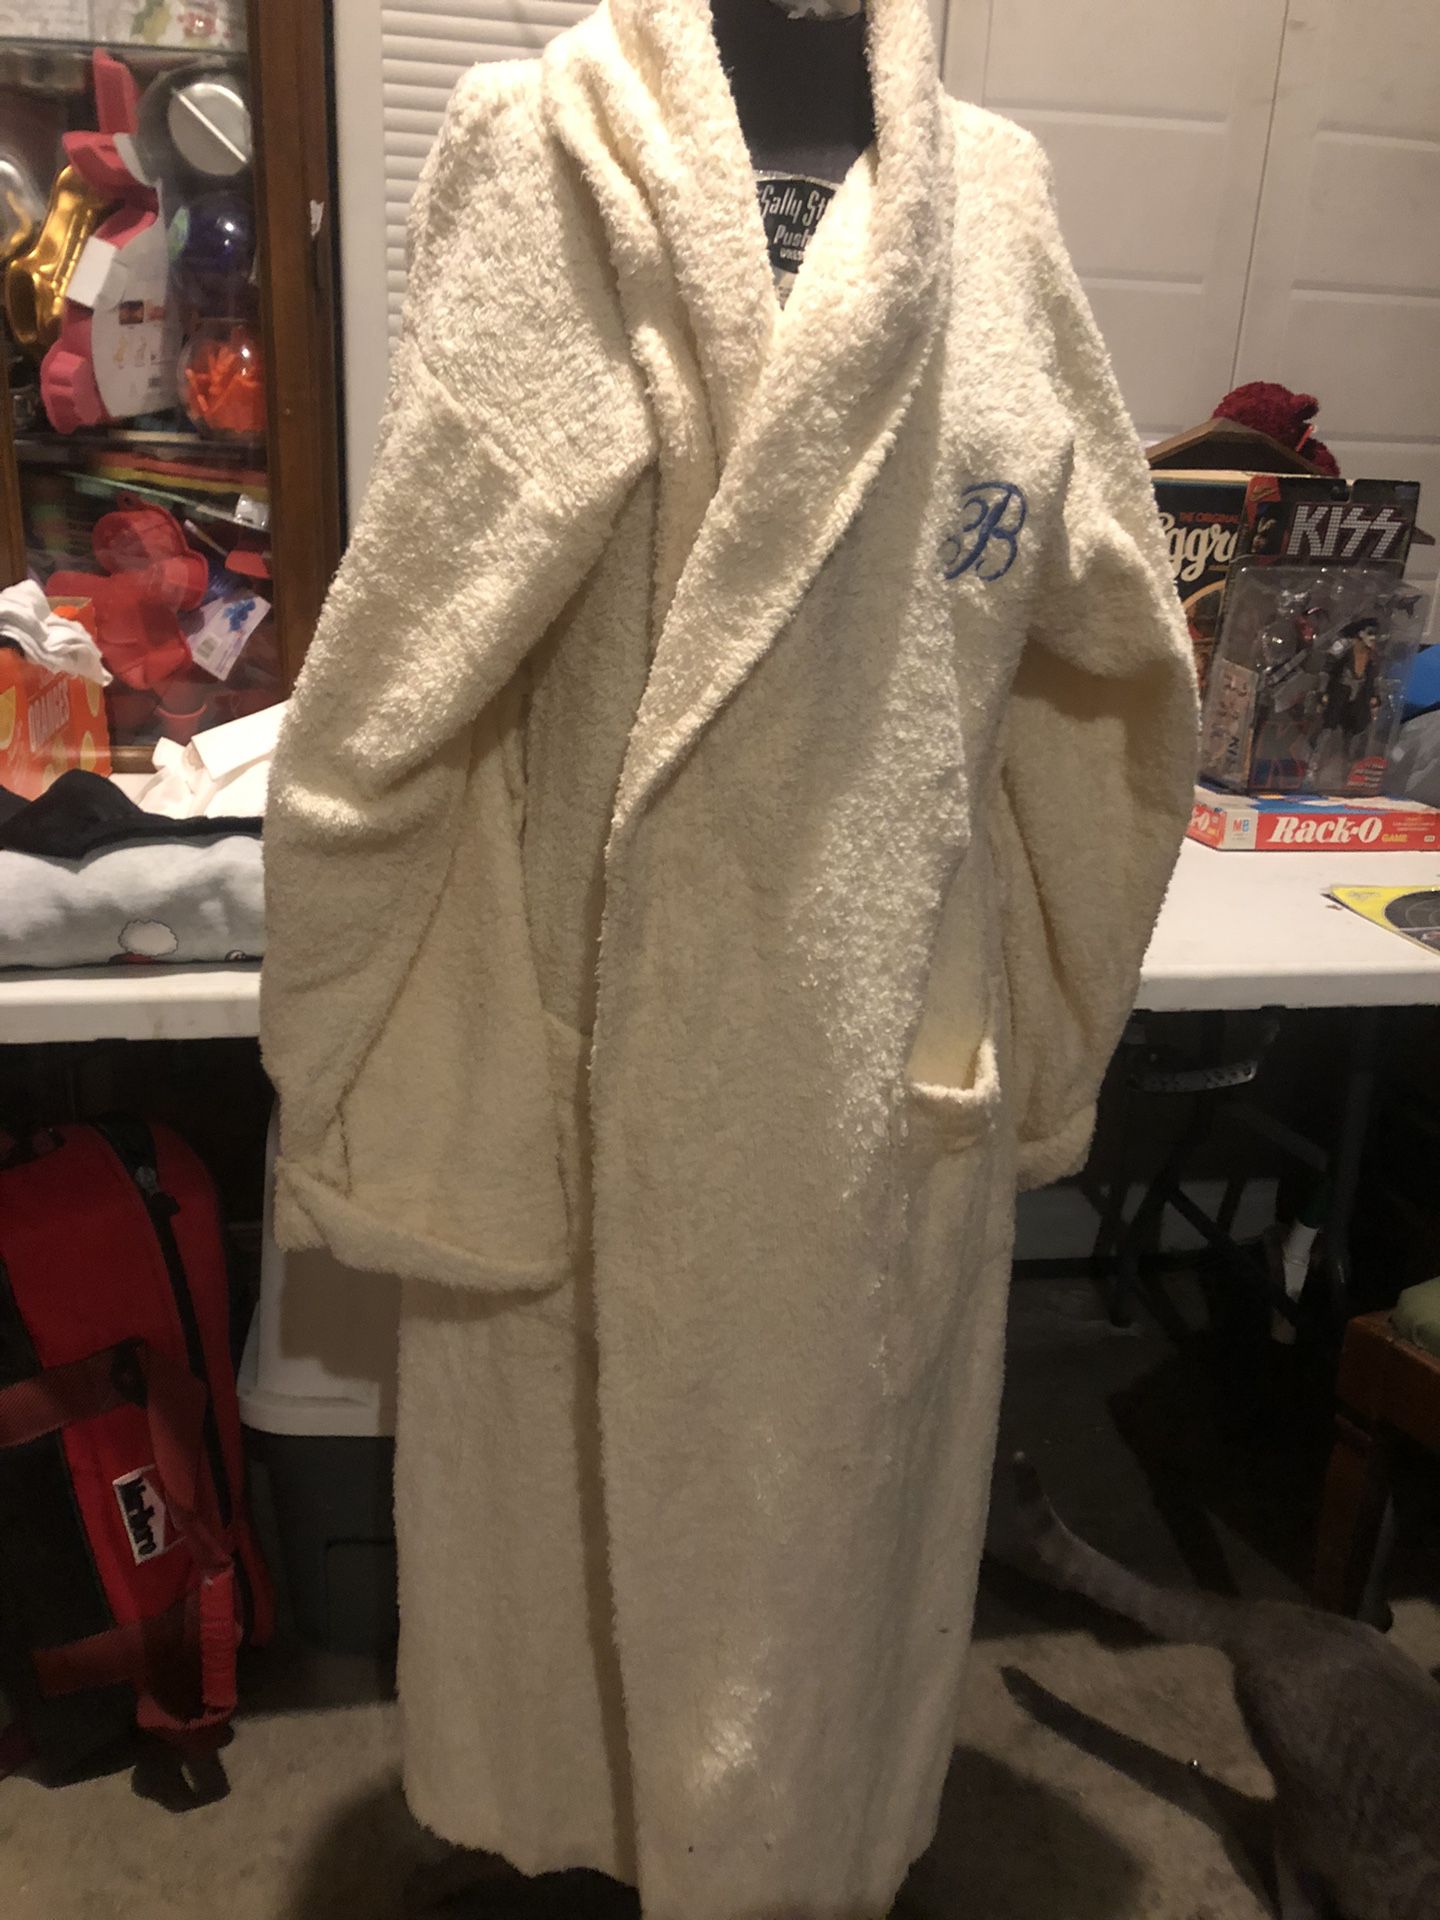 Terry Cloth Robe